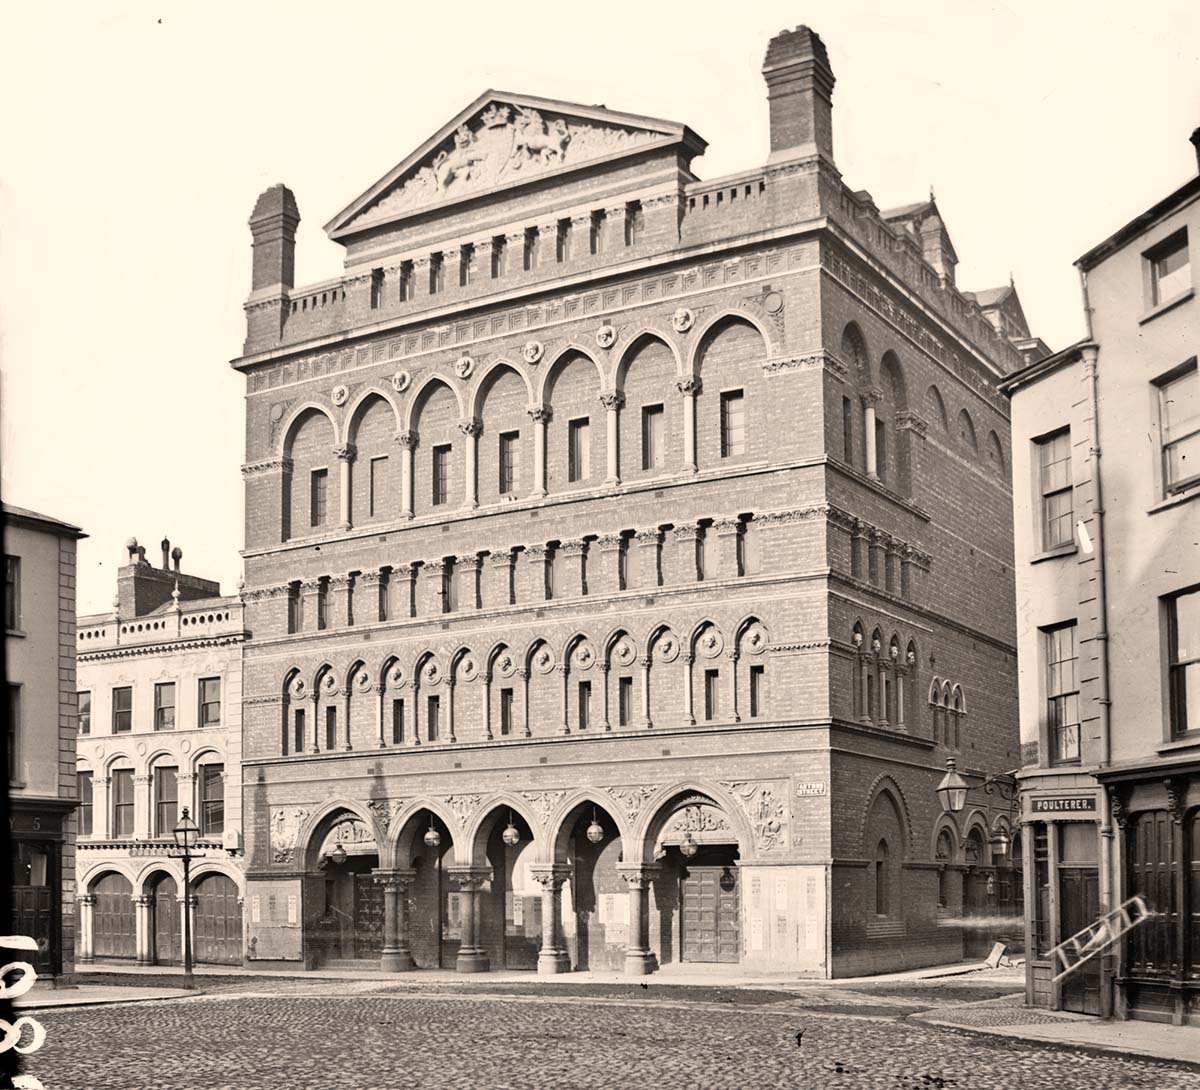 Belfast's Theatre Royal